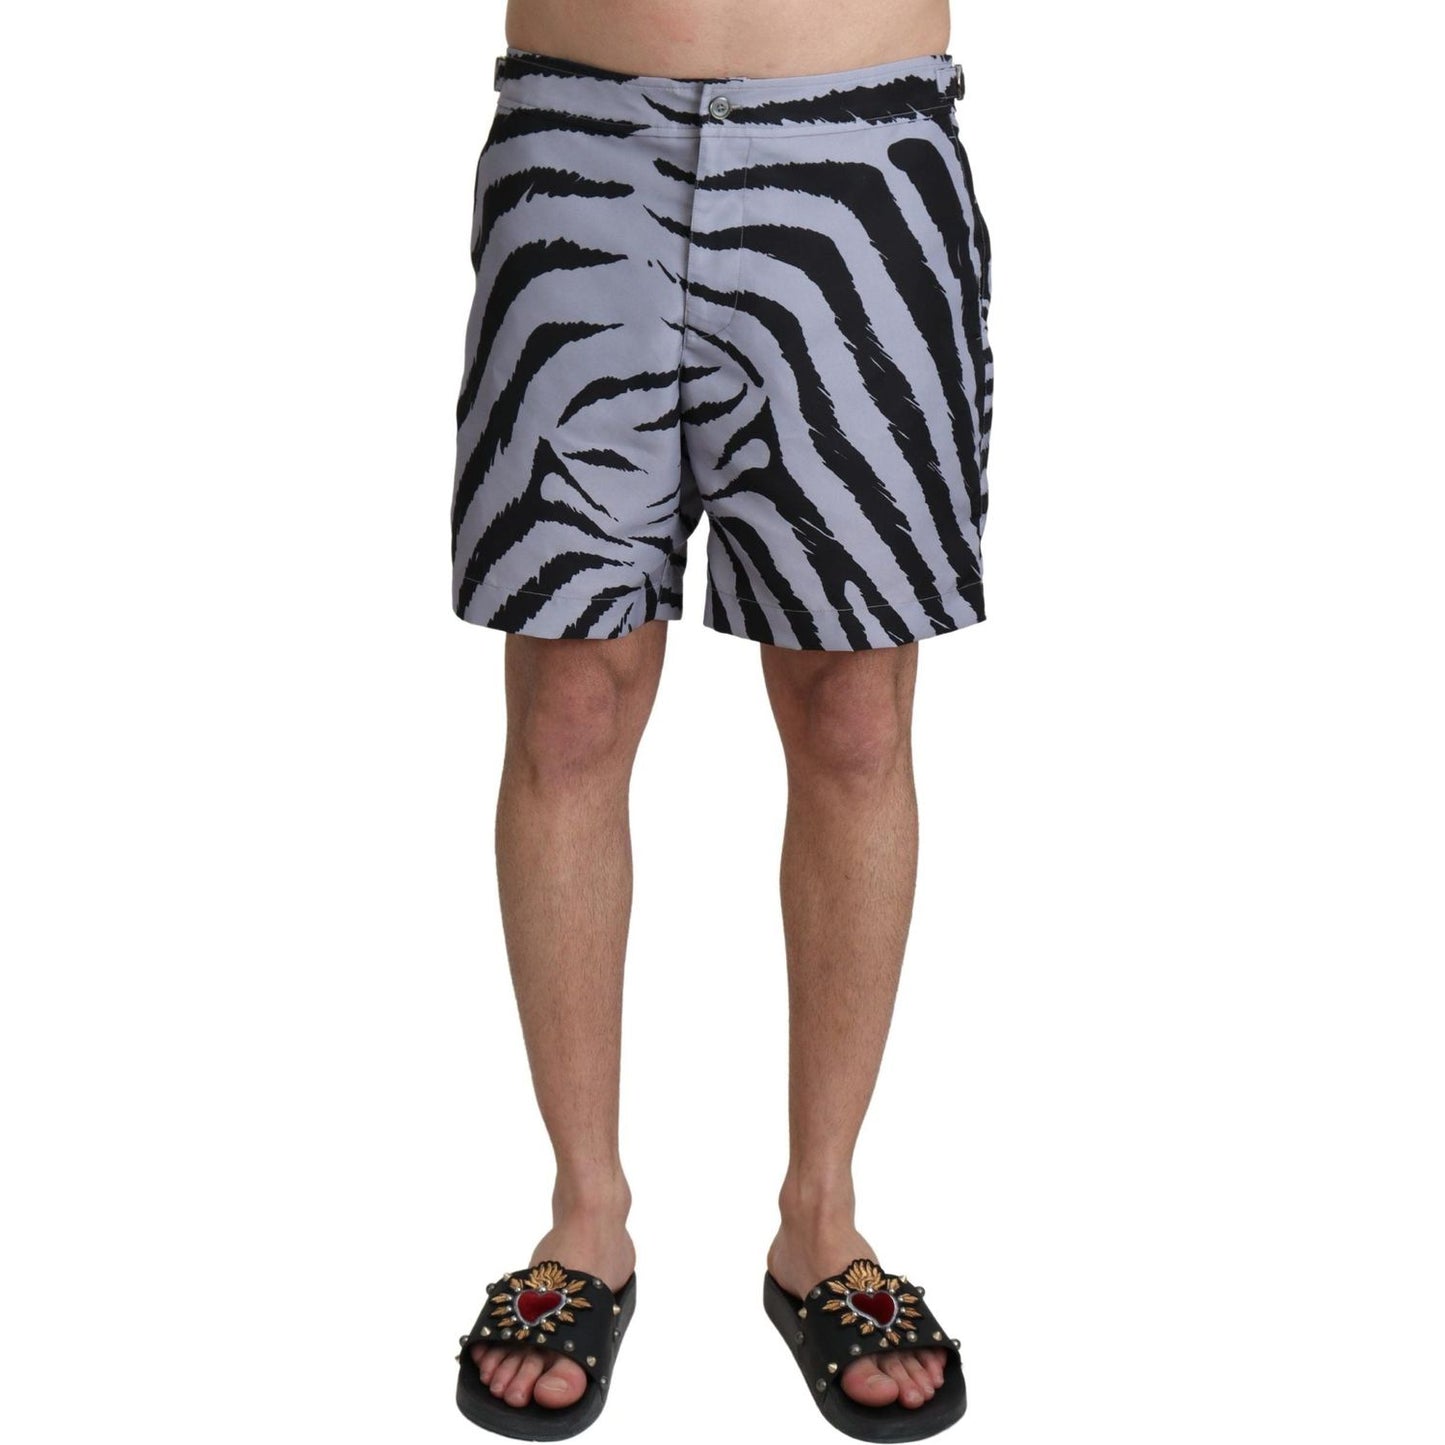 Dolce & Gabbana Elegant Gray Zebra Print Swim Trunks gray-zebra-print-beachwear-shorts IMG_0854-scaled-0d59a405-aa9.jpg